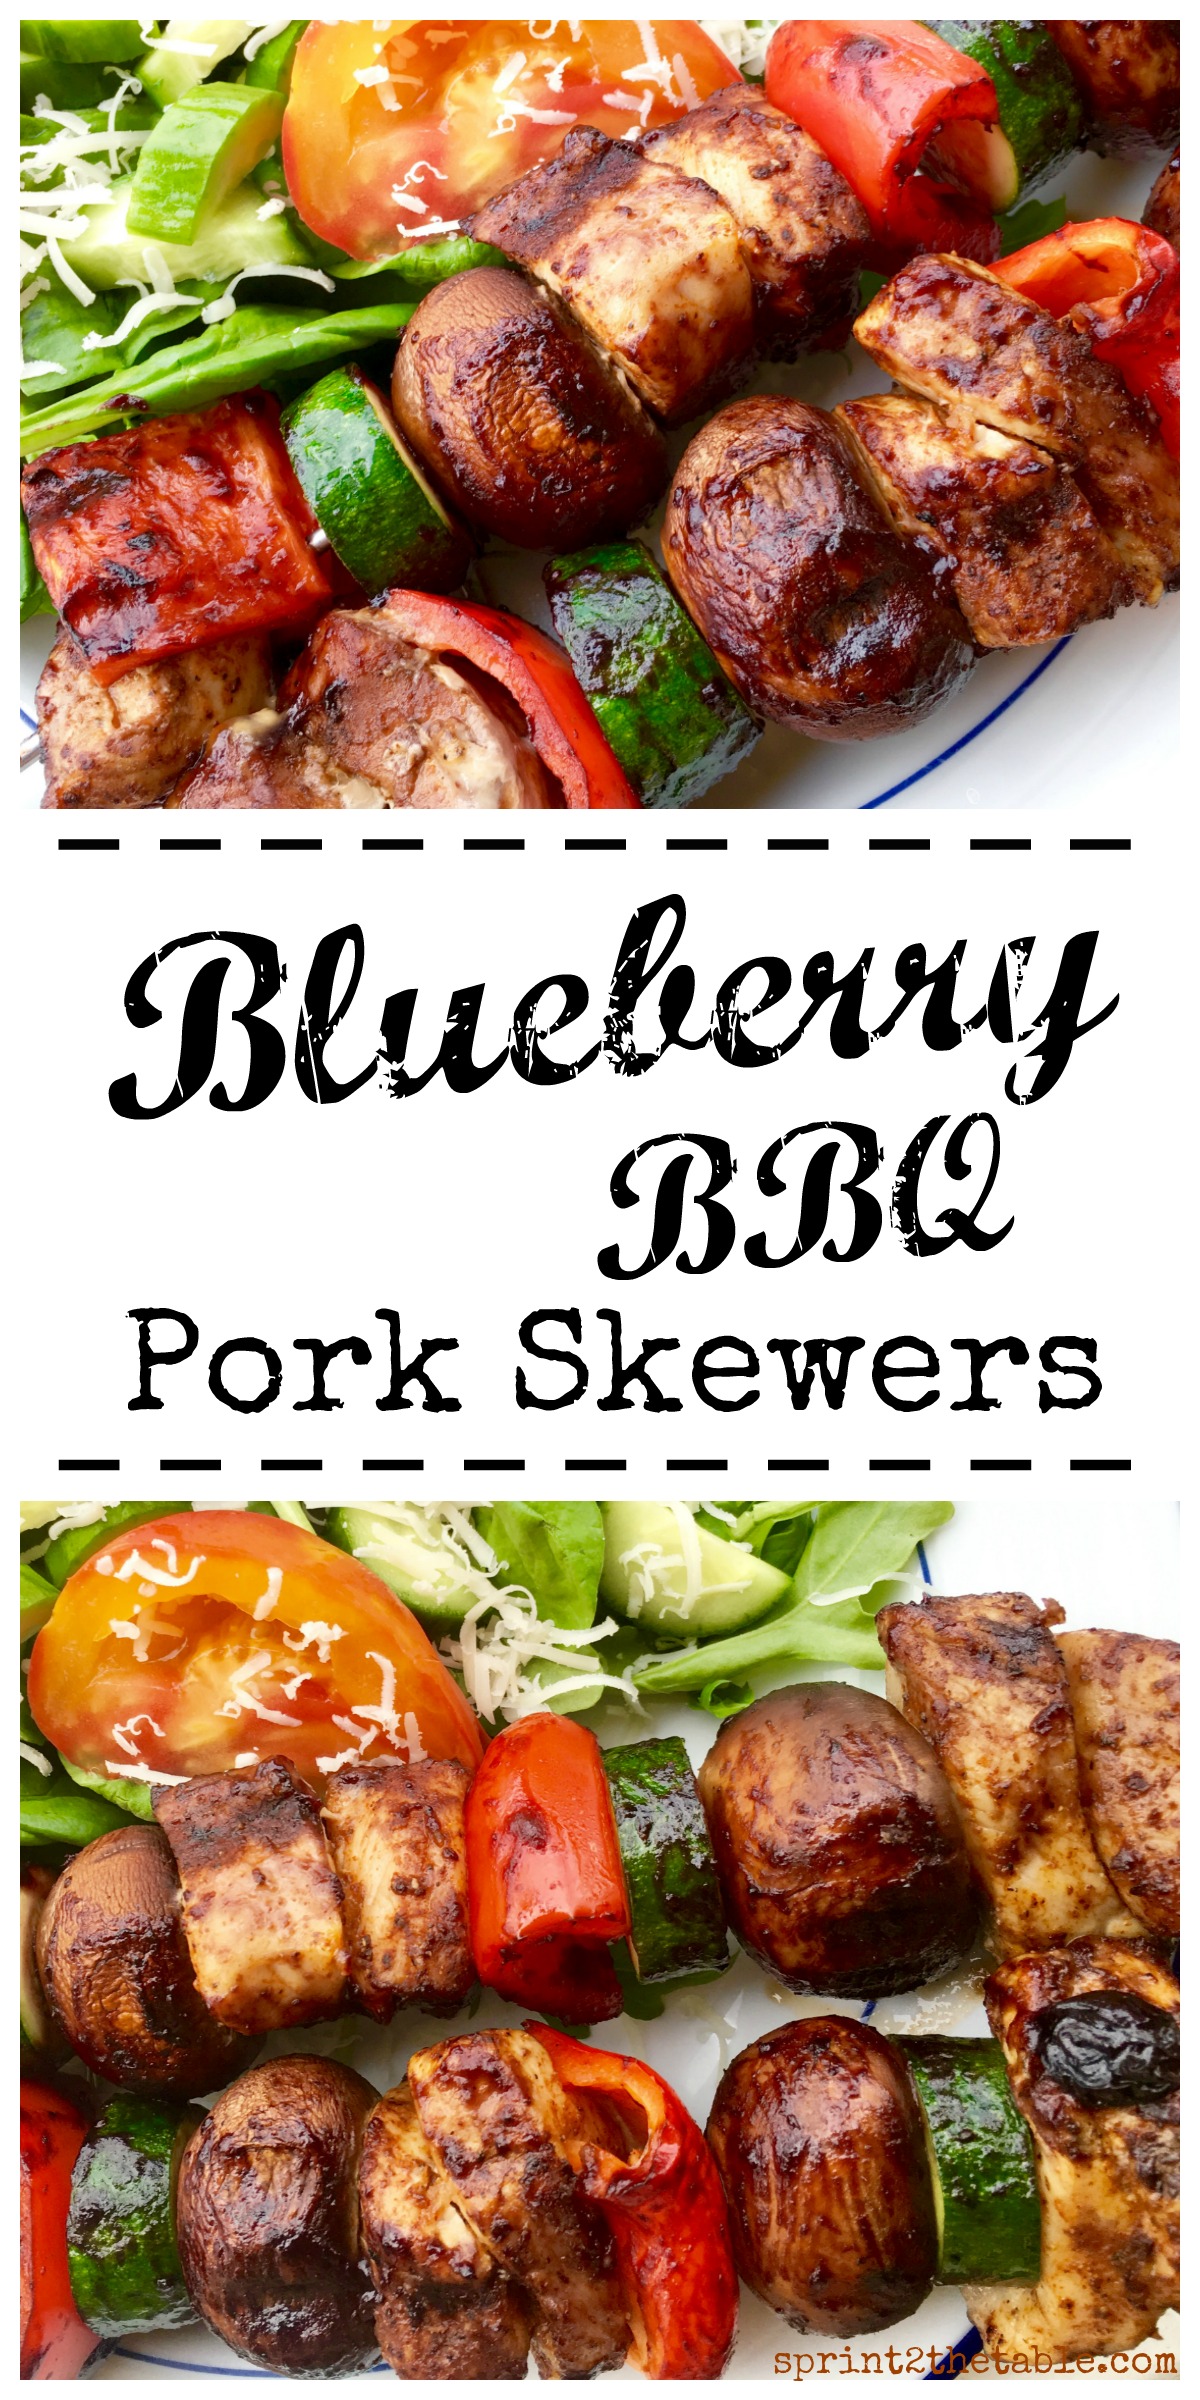 Blueberry BBQ Pork Skewers - great sweet-n-savory grill recipe!